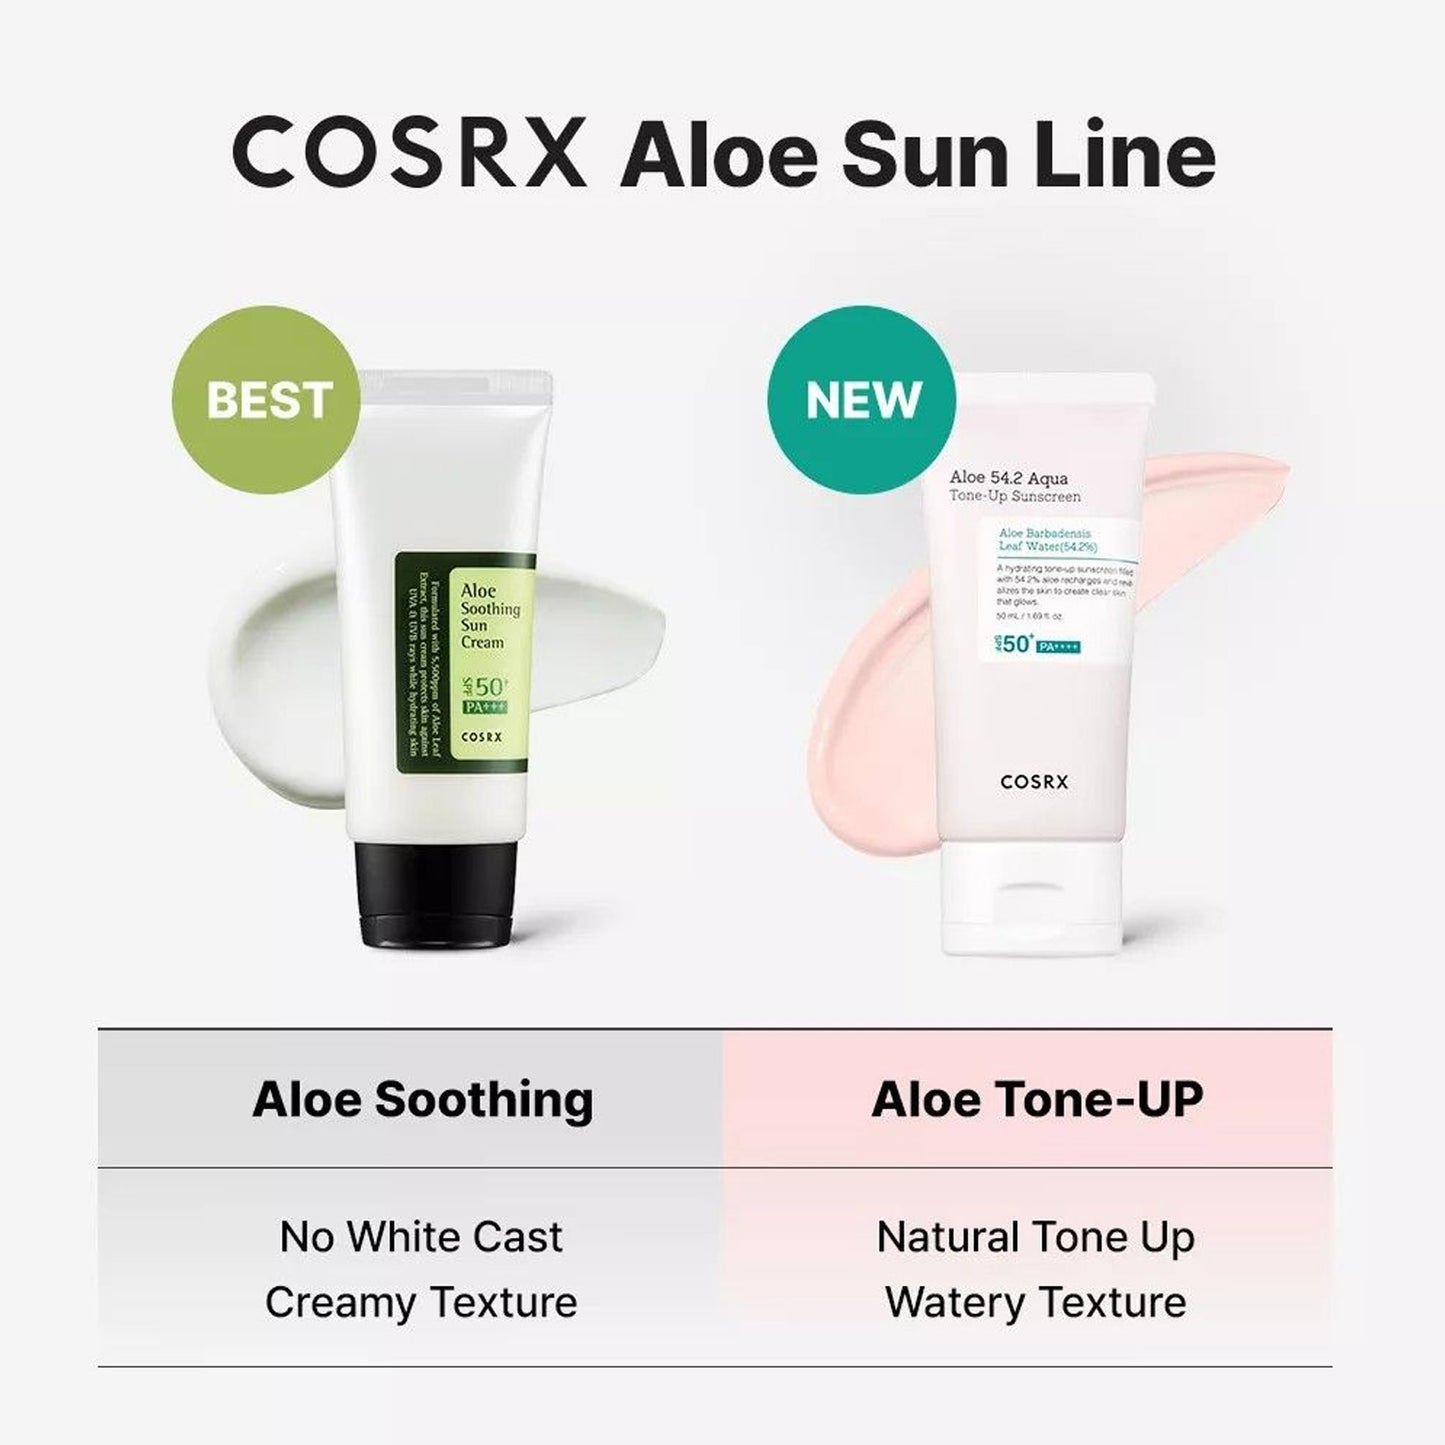 [COSRX] Aloe 54.2 Aqua Tone-Up Sunscreen 50ml